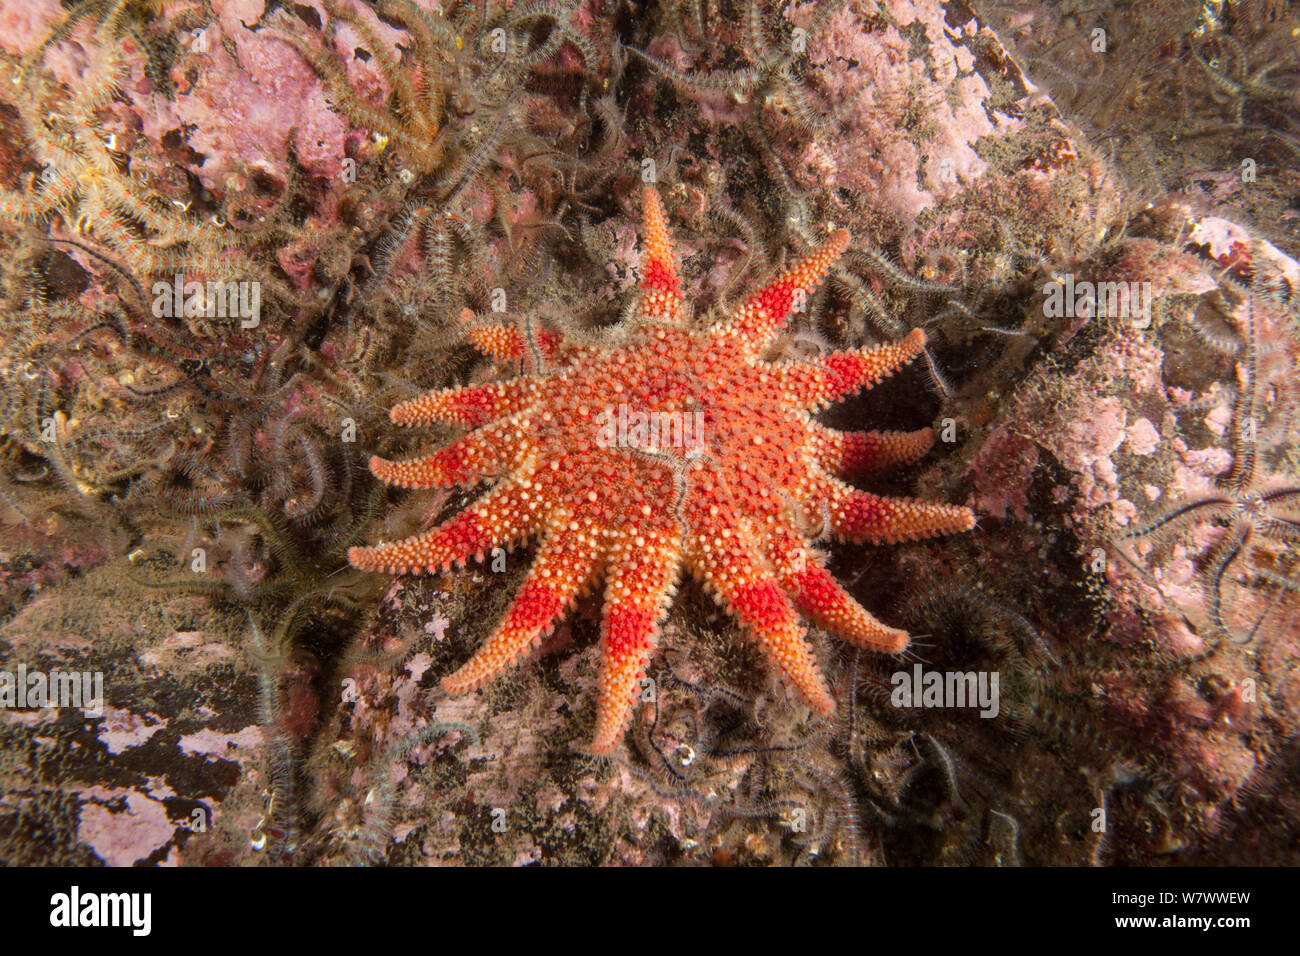 Common sun star (Crossaster papposus) St Abbs Voluntary Marine Reserve, Scotland (North Sea). Stock Photo